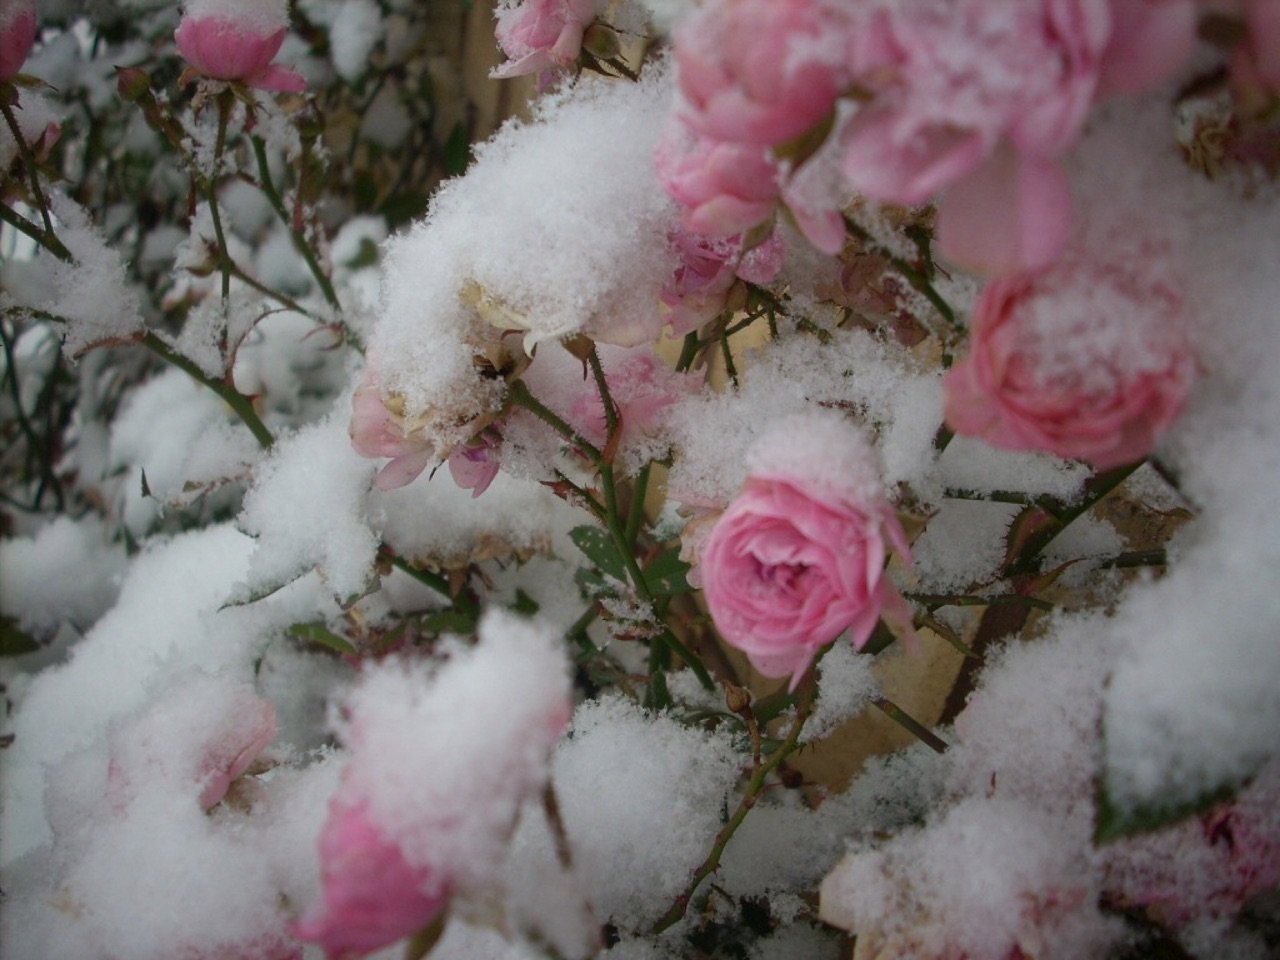 Розовая зима